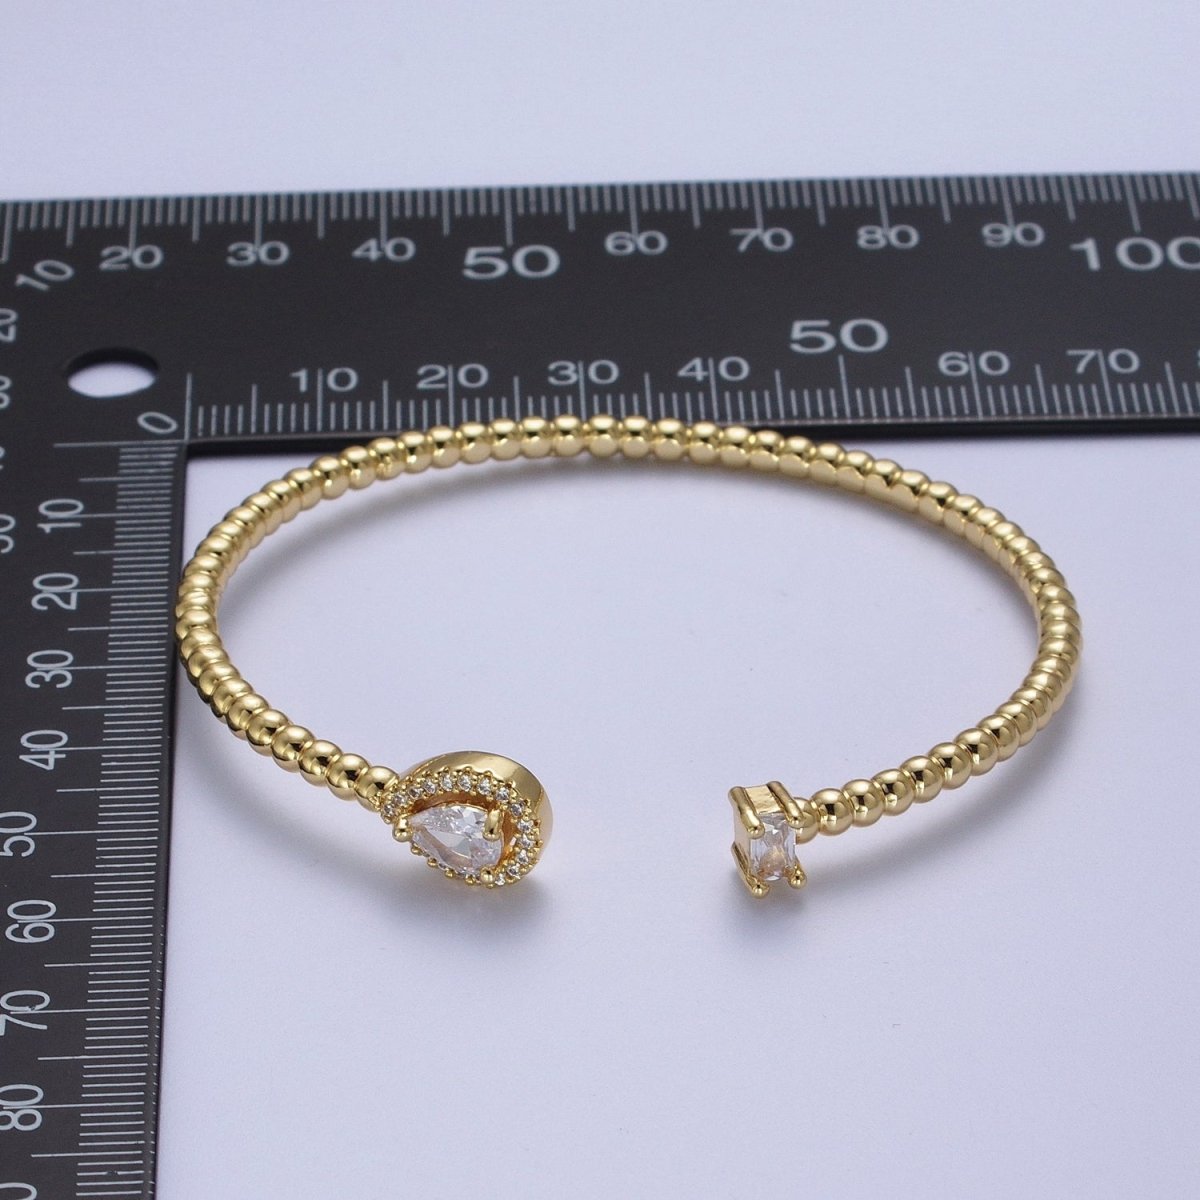 24K Gold Filled Beaded Green, Clear, Fuchsia Teardrop Baguette Cubic Zirconia Bangle Bracelet | WA-1170 WA-1171 WA-1172 Clearance Pricing - DLUXCA